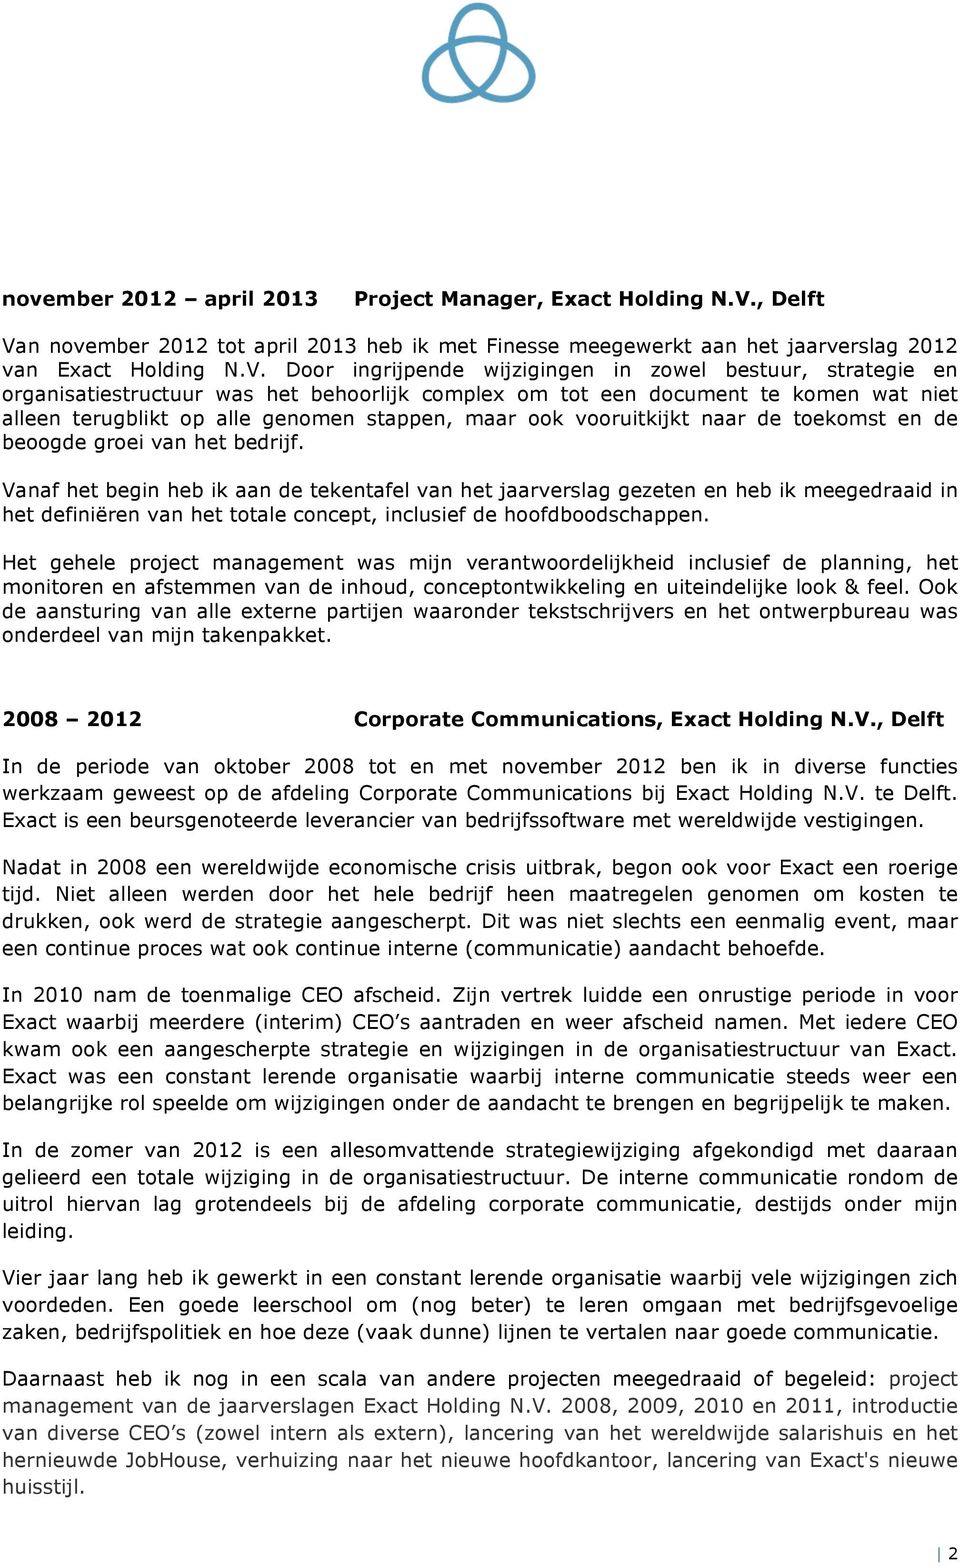 n november 2012 tot april 2013 heb ik met Finesse meegewerkt aan het jaarverslag 2012 van Exact Holding N.V.